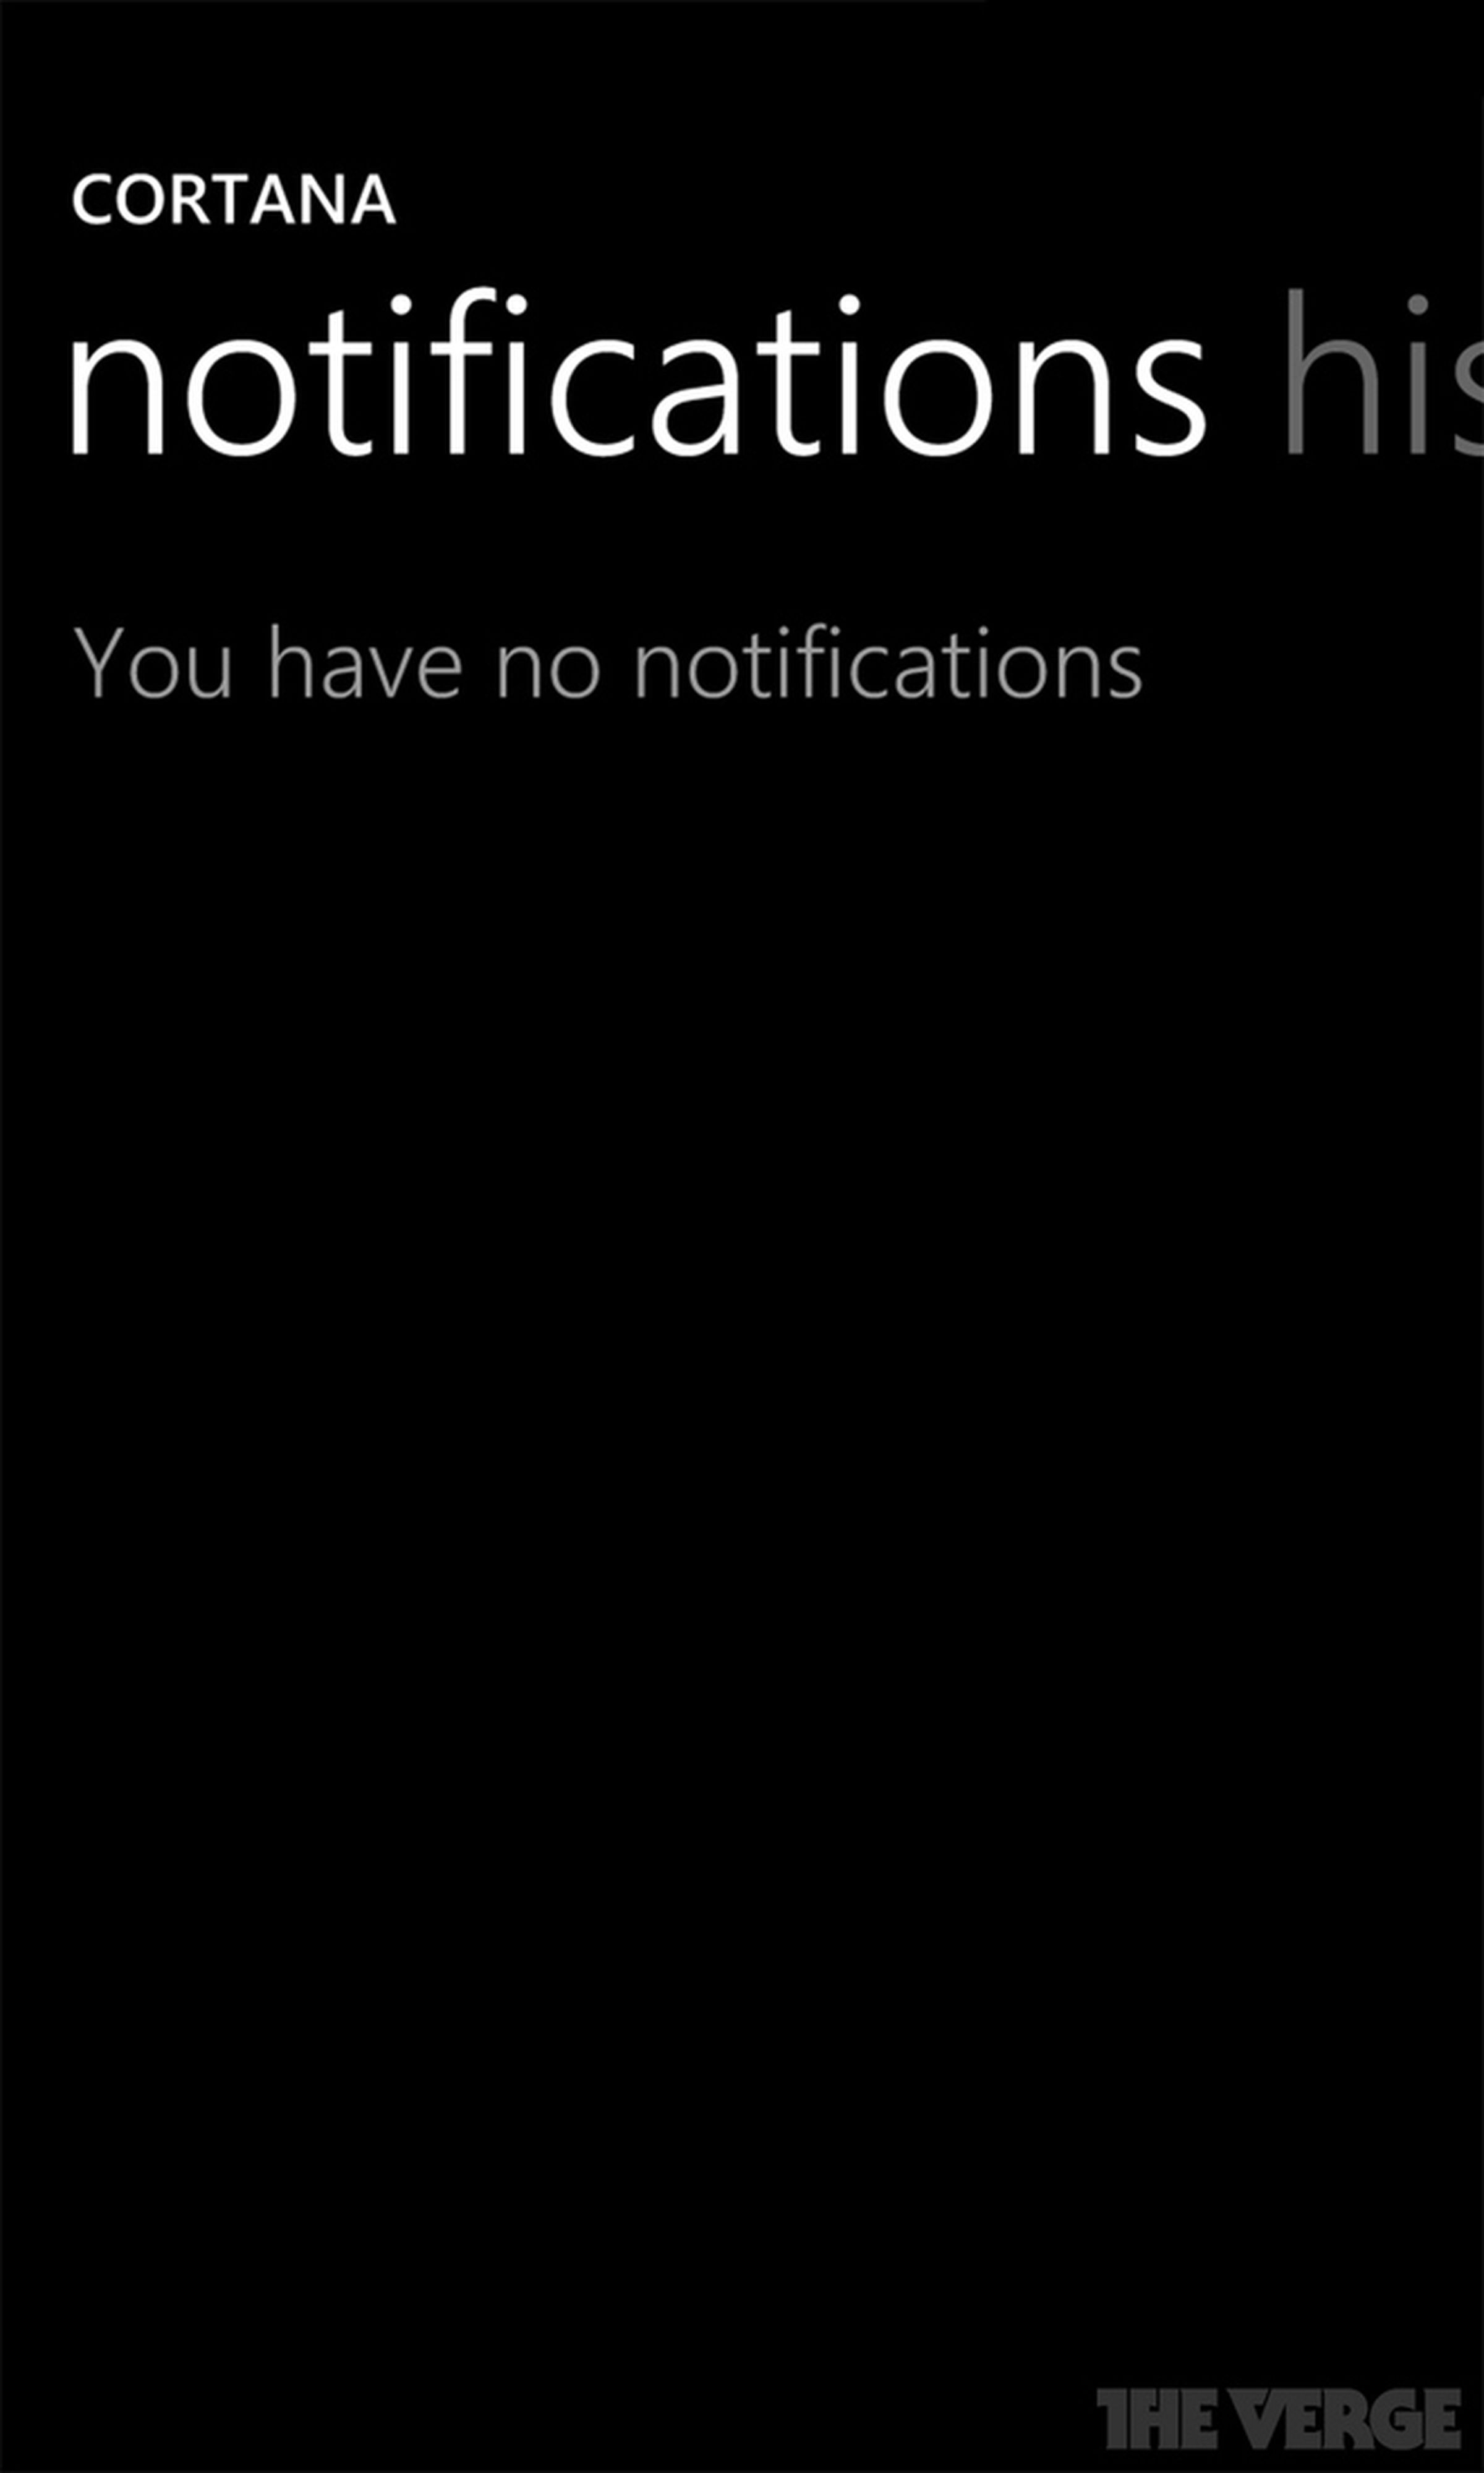 Windows Phone 8.1 'Cortana' personal assistant screenshots